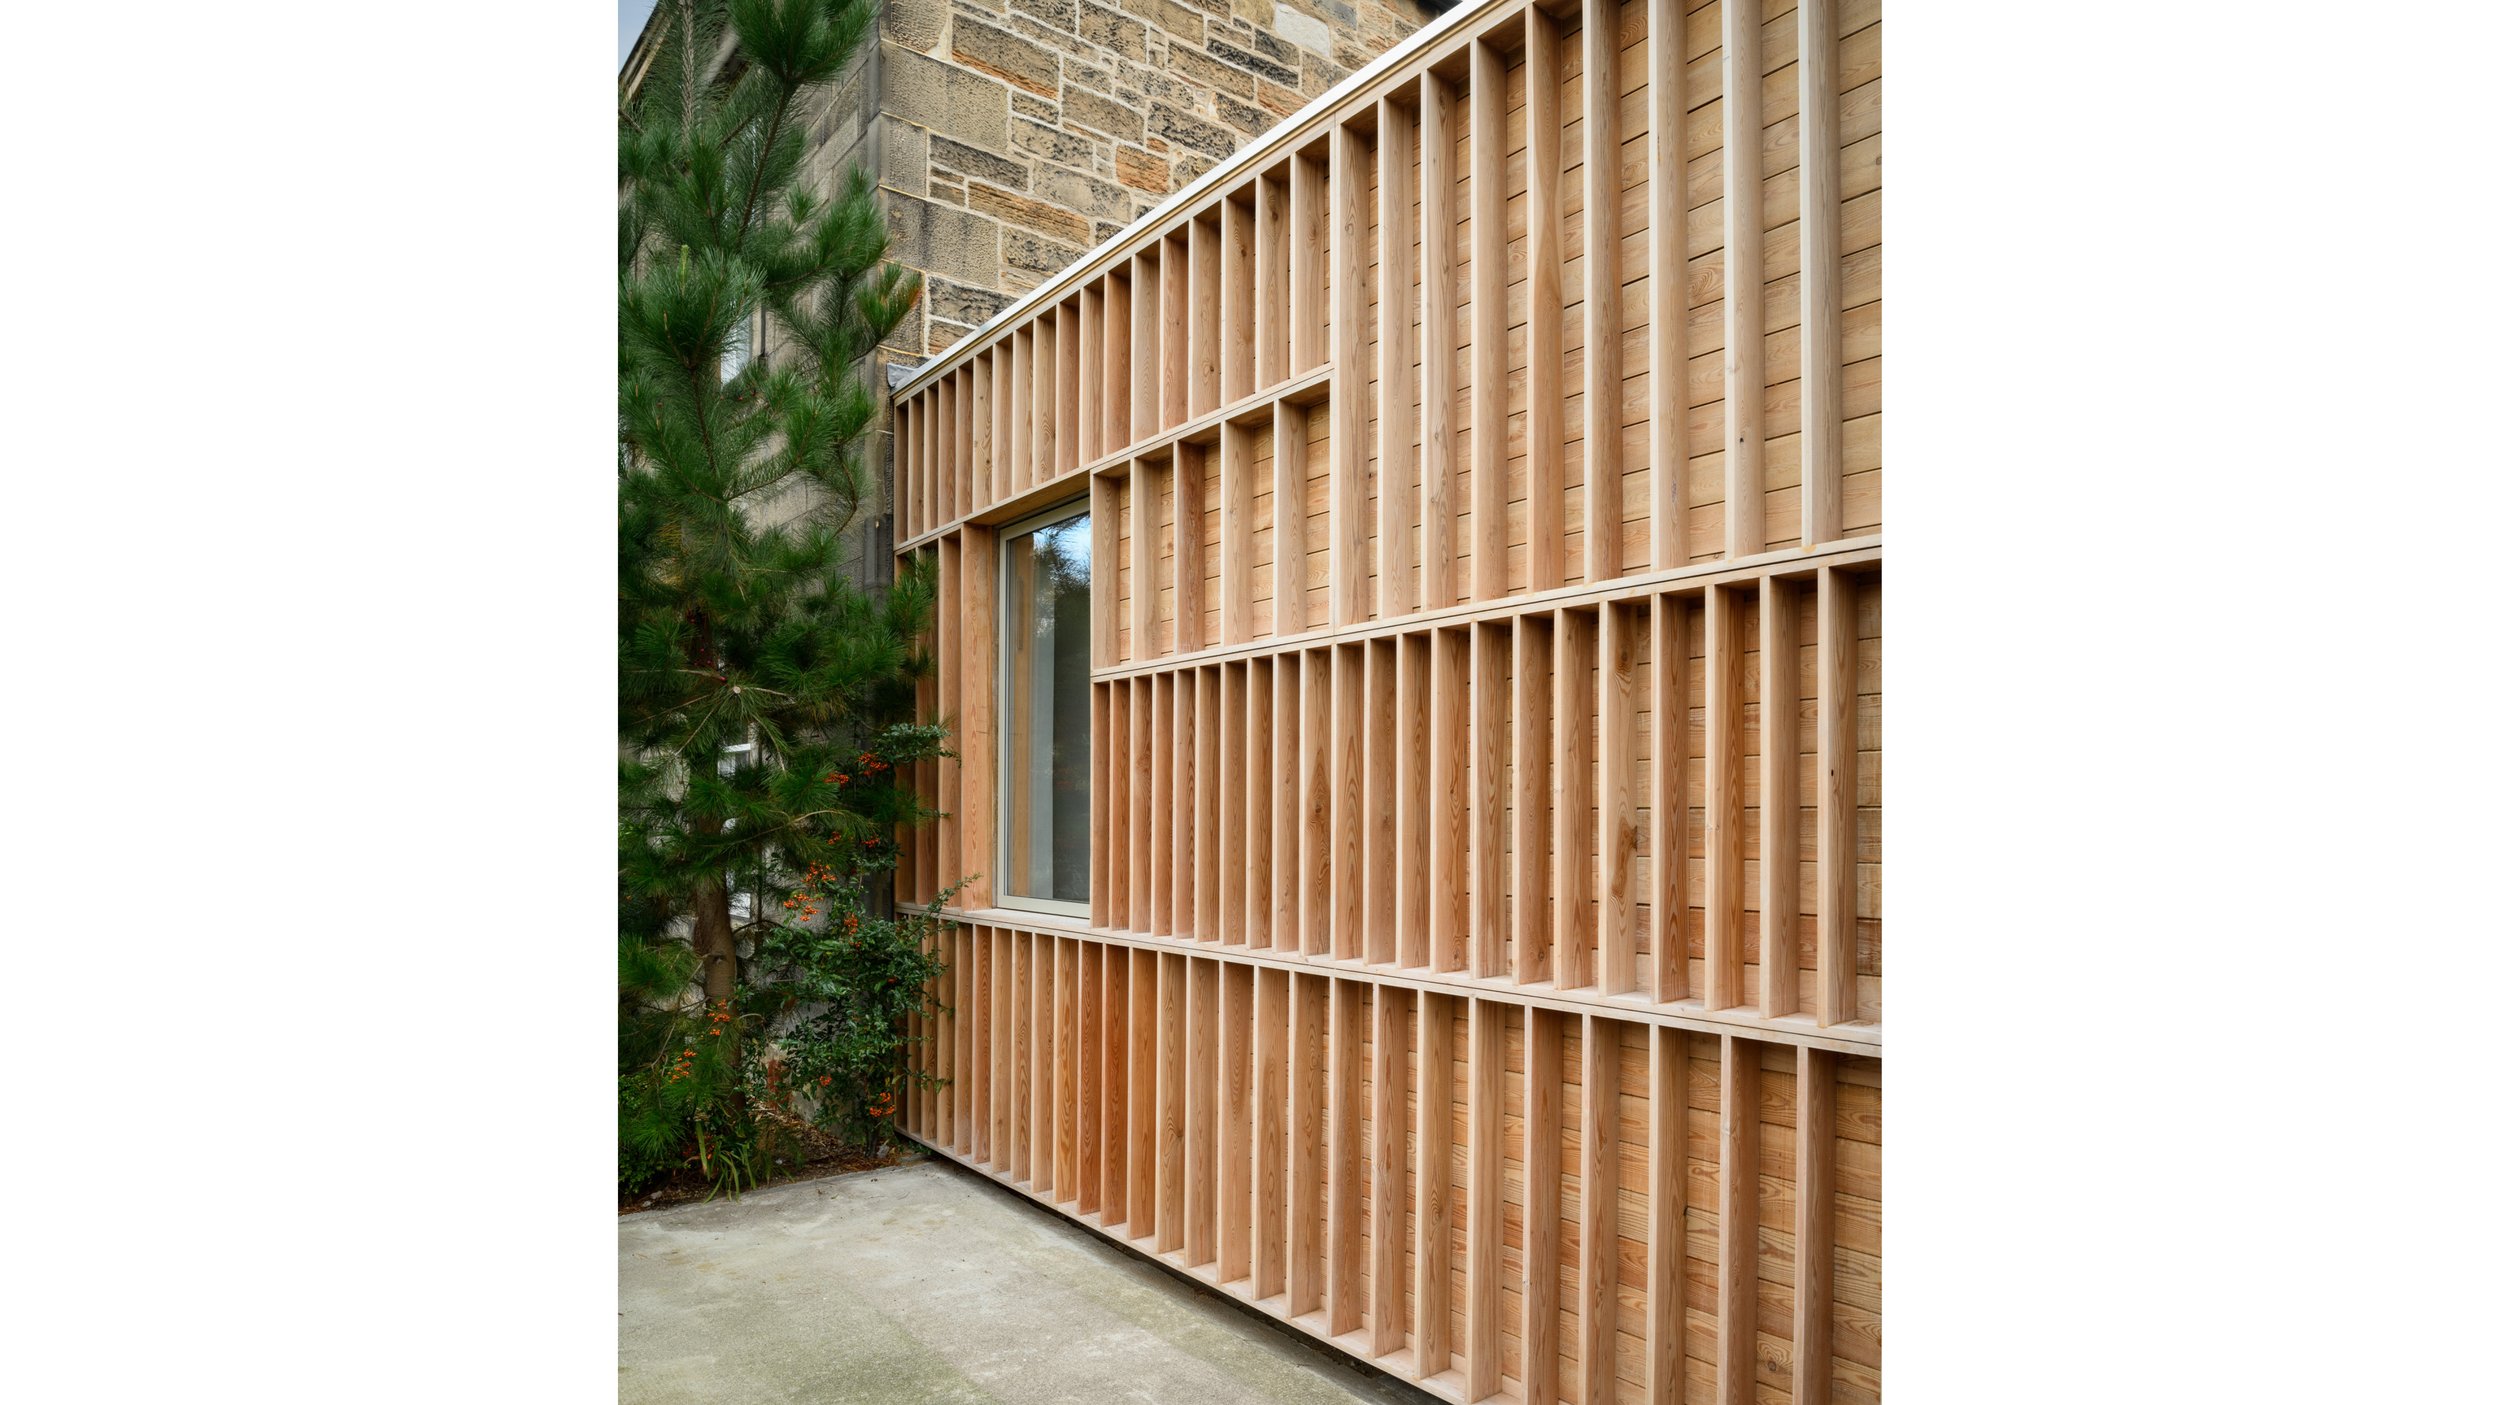 eaa-edinburgh-architectural-association-scotland-uk-awards-2022-winners-small-project-6.jpg